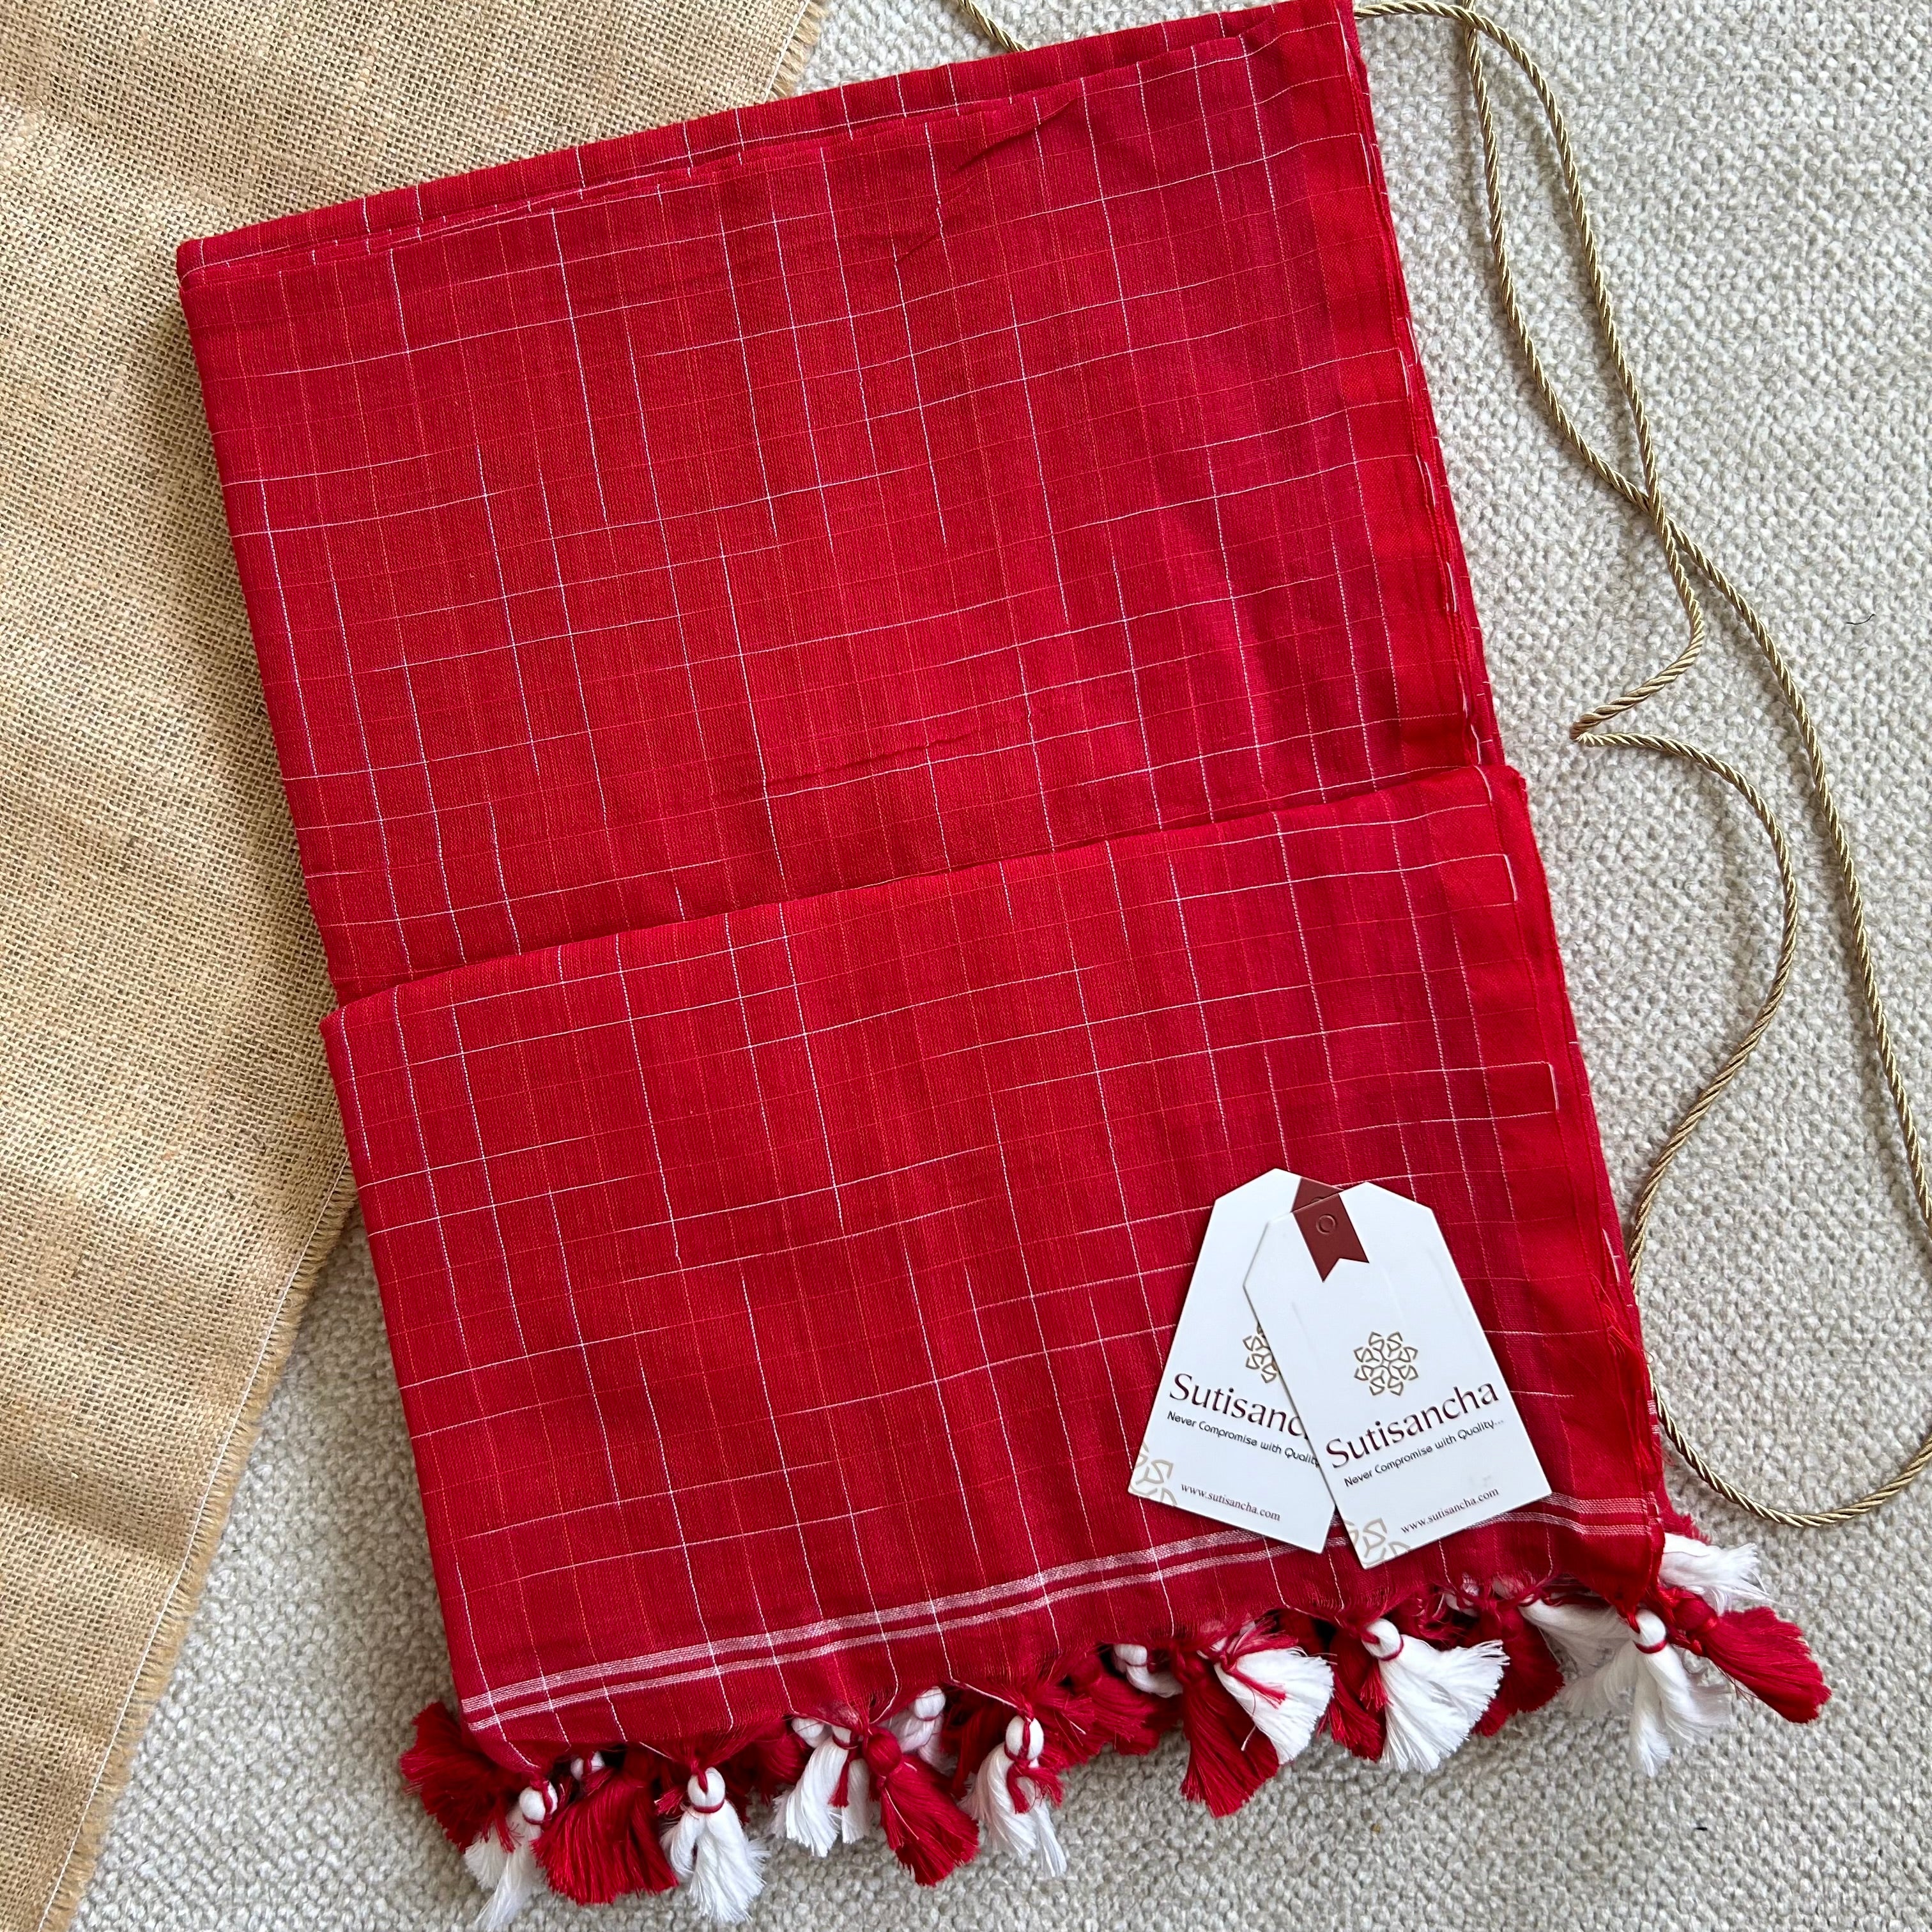 Sutisancha Red Handloom Cotton Saree with Trendy Kotki Checks Design